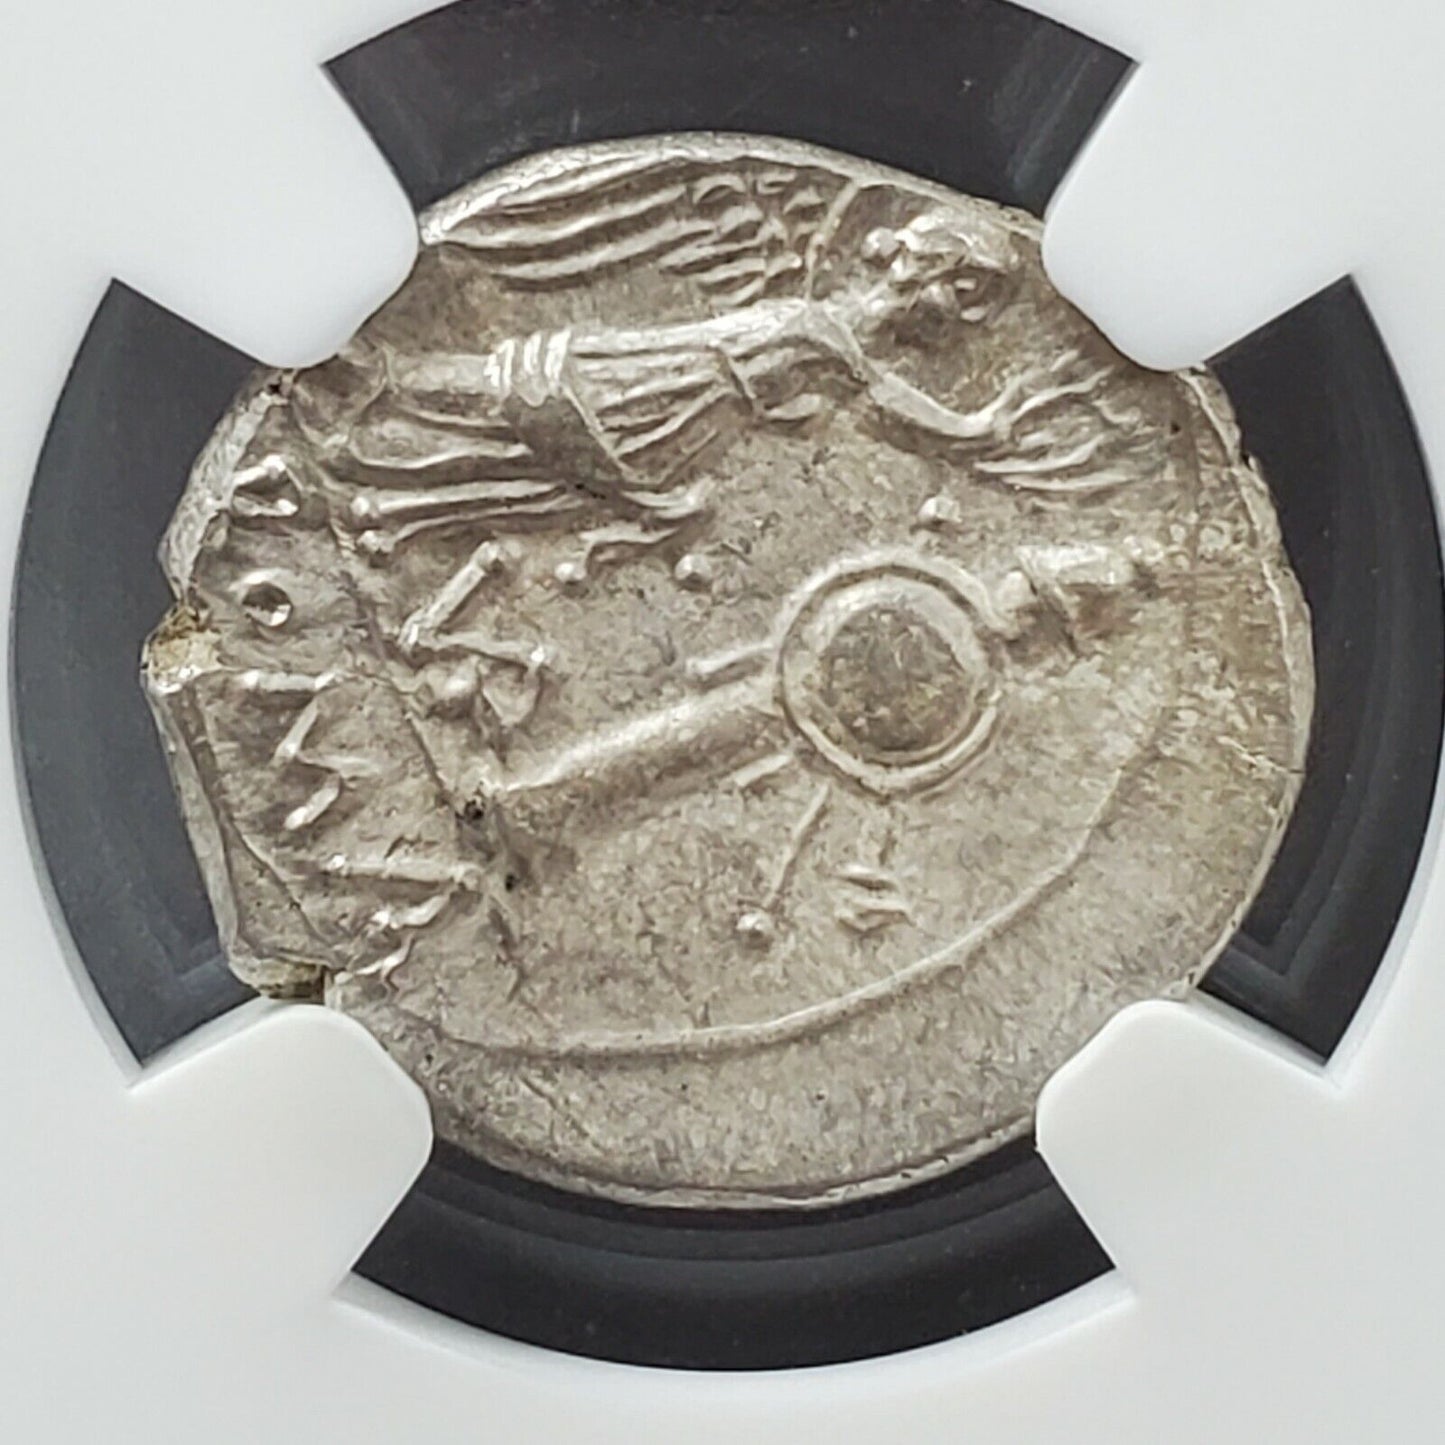 Roman Republic AR Victoriatus Silver Coin 211-208 BC - Certified NGC MS BU UNC